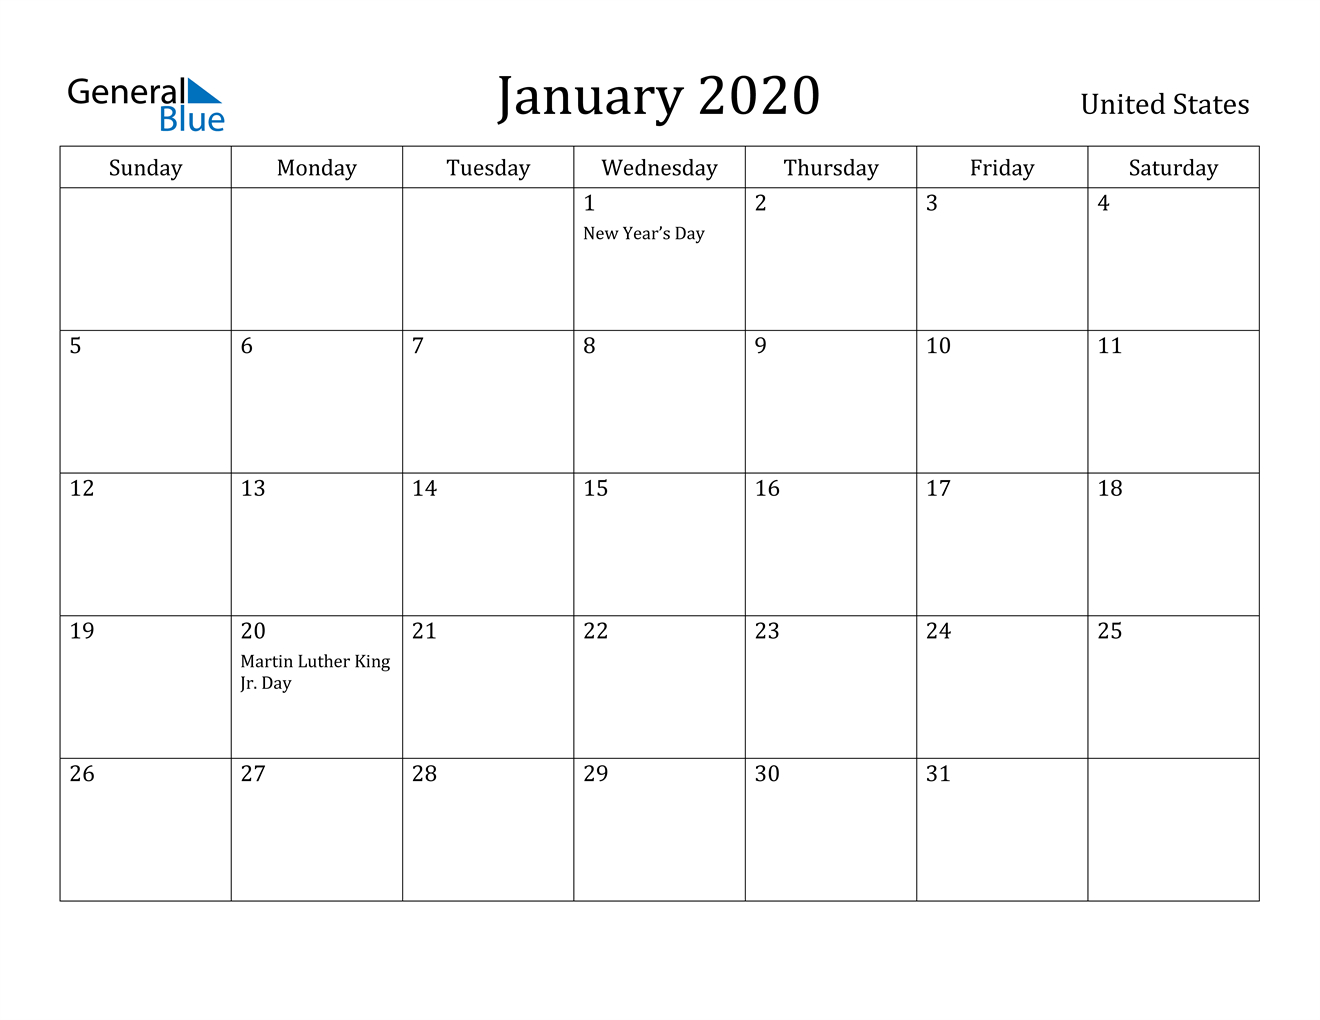 January 2020 Calendar - United States